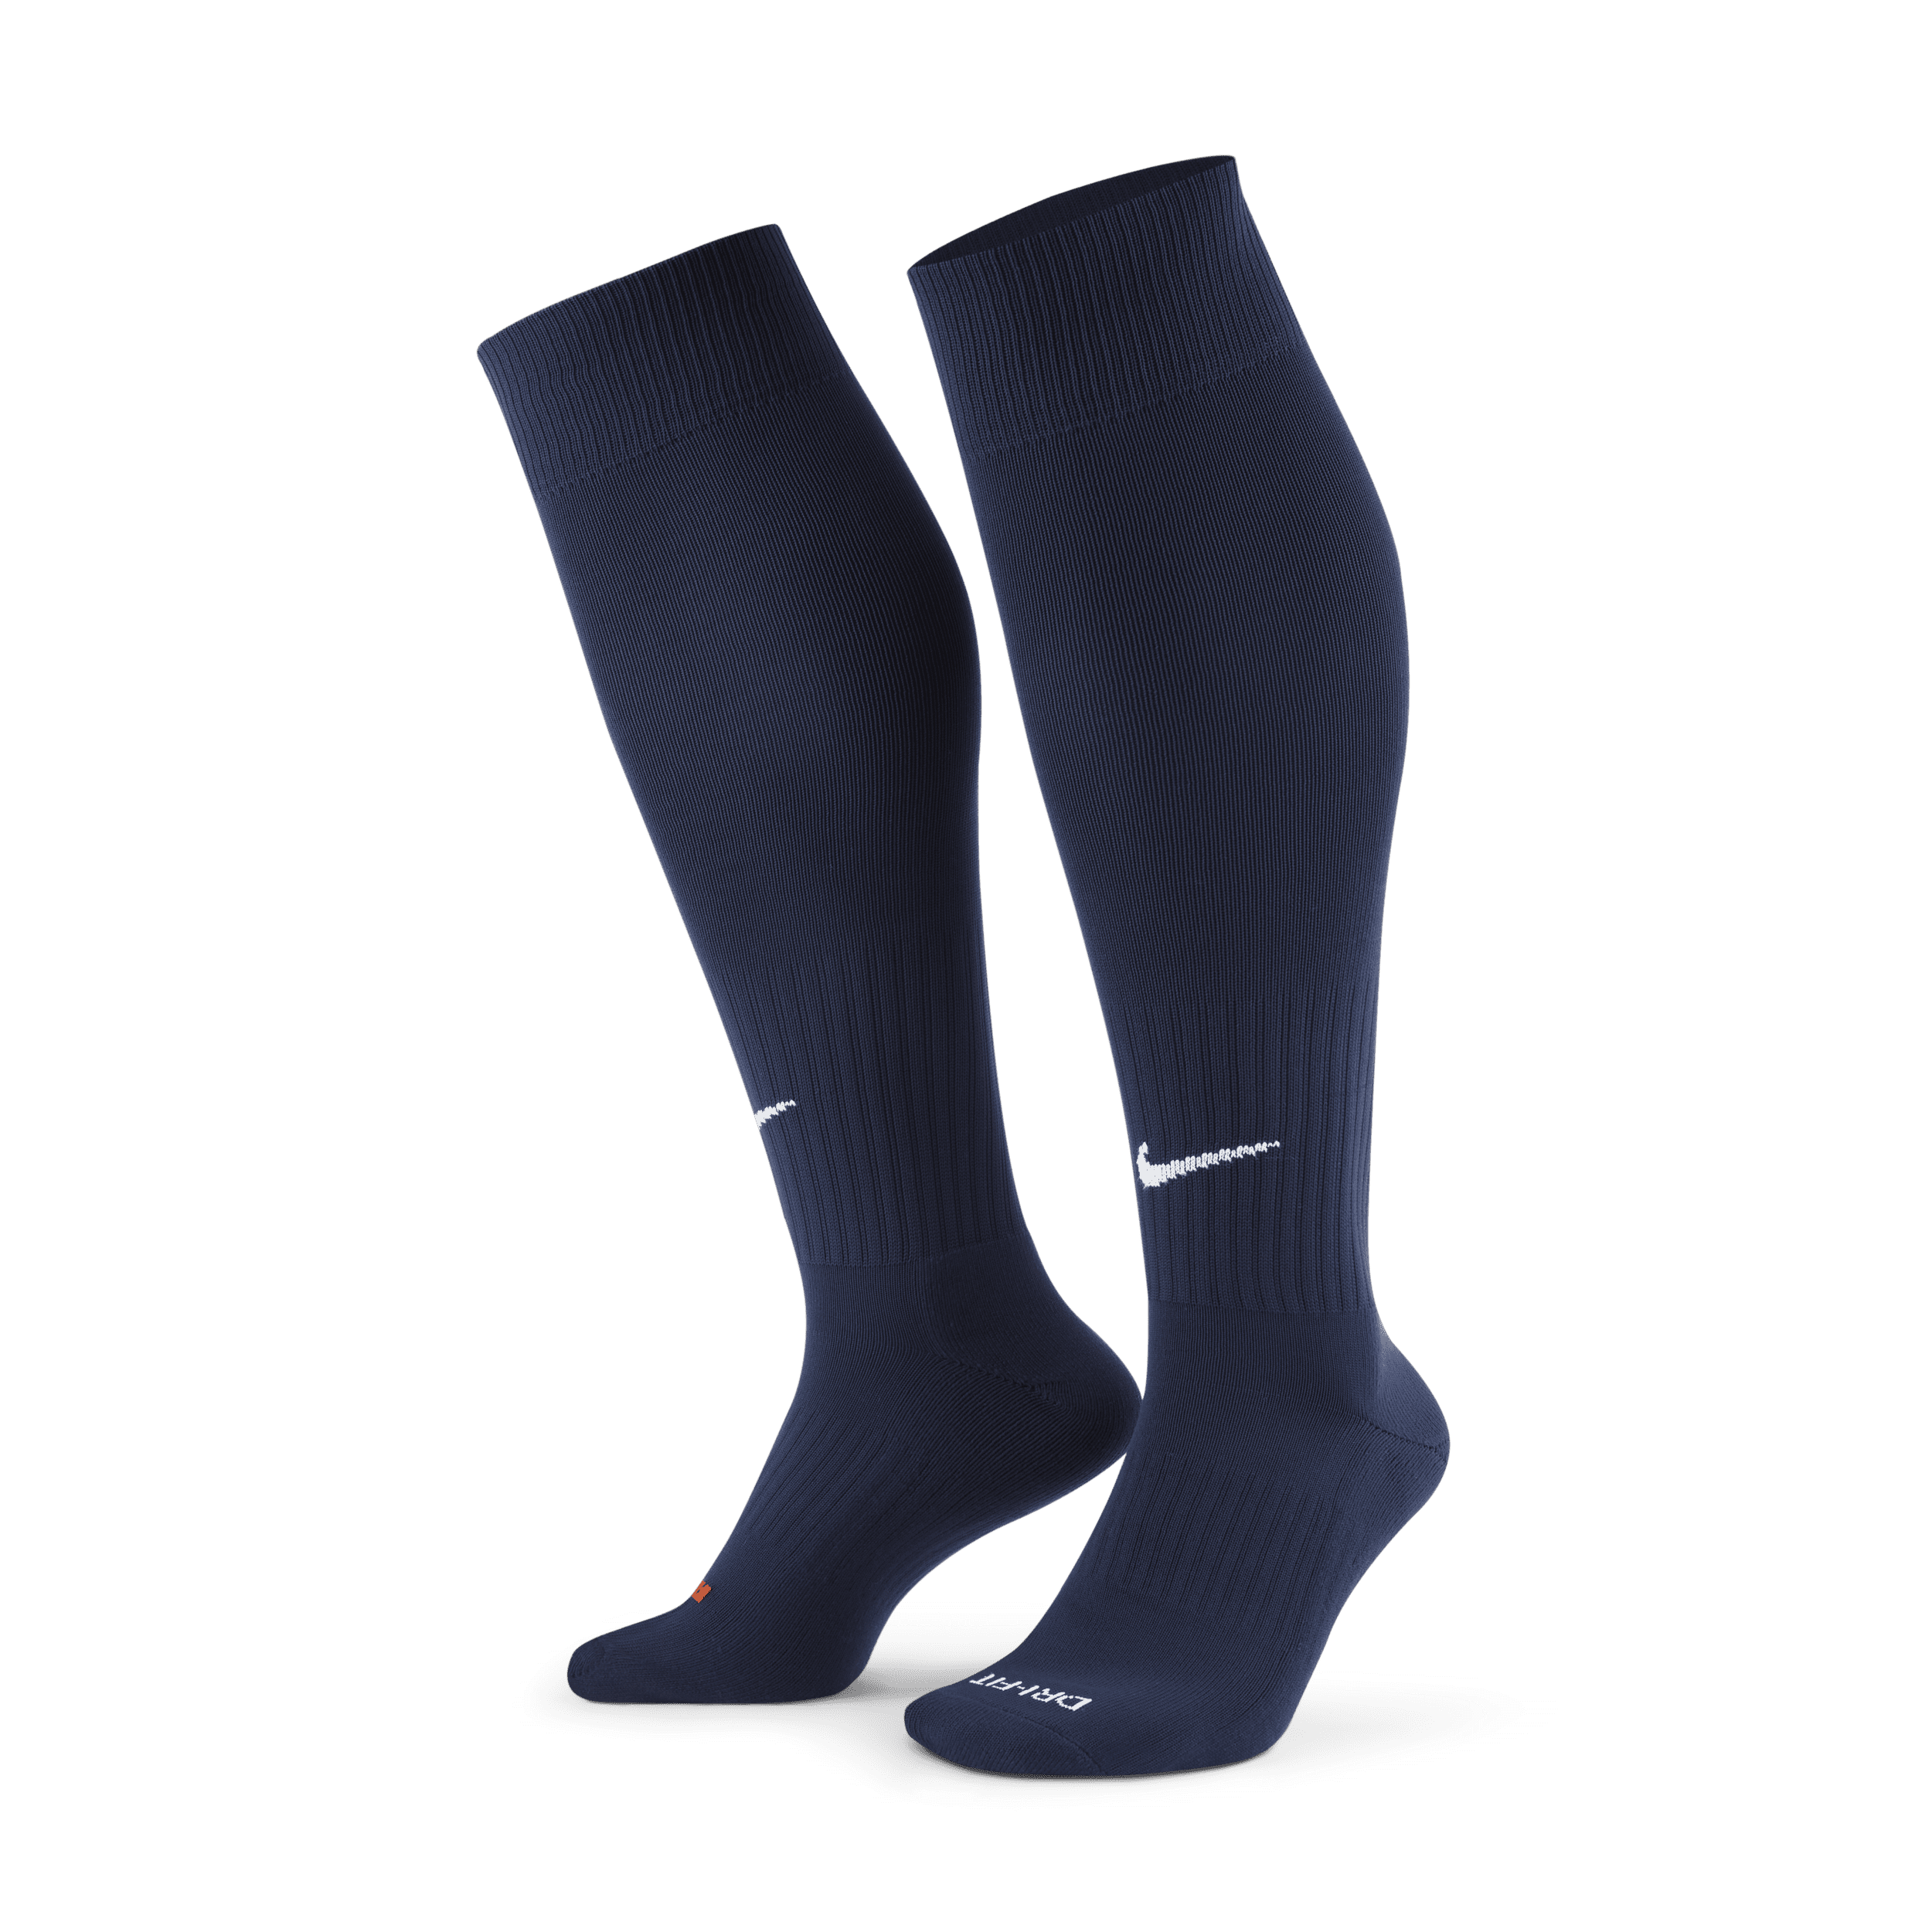 Nike Academy Medias de fútbol - Azul